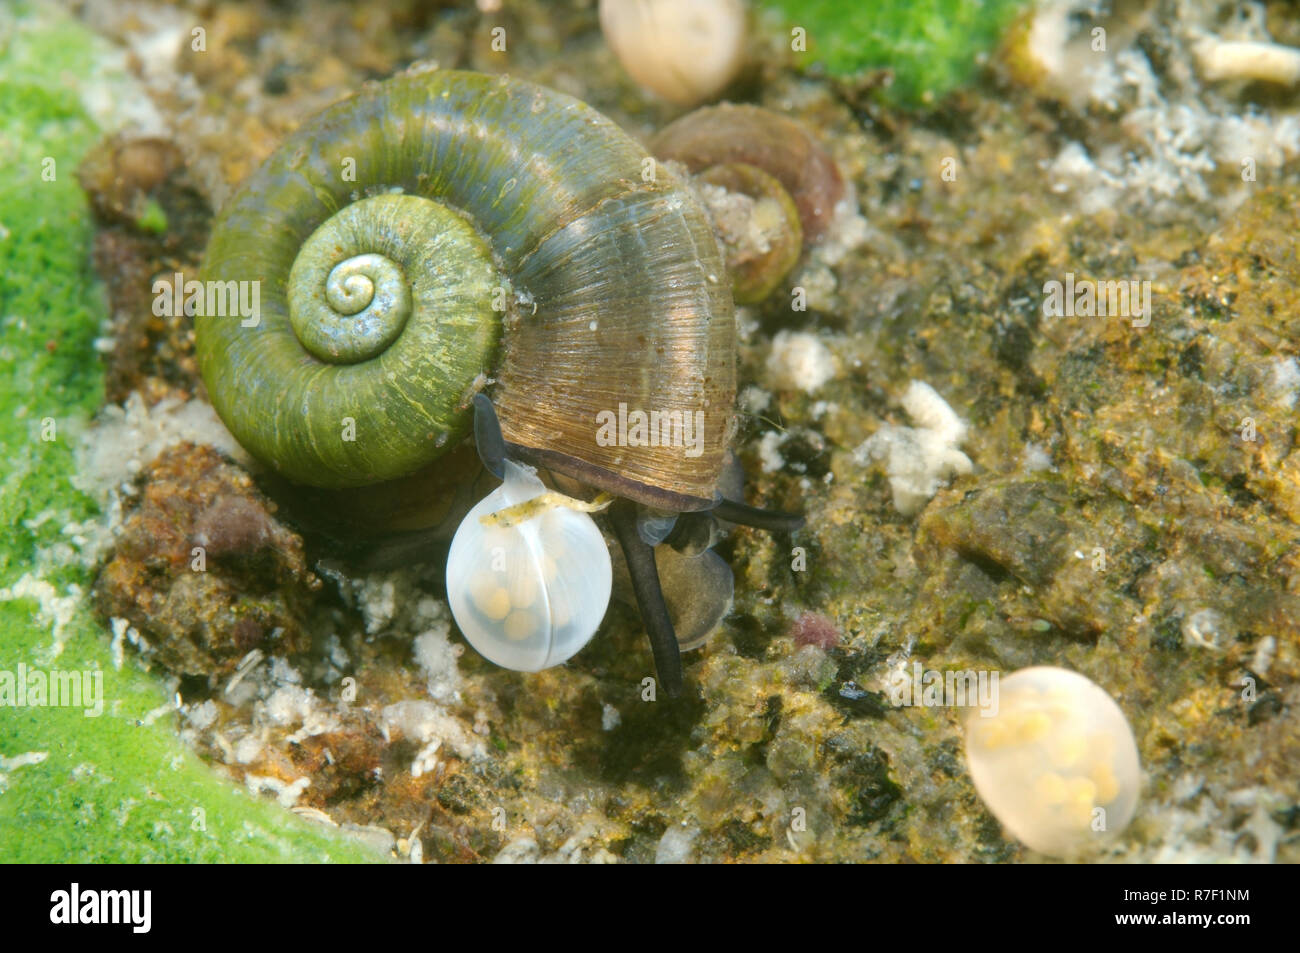 Great Ramshorn Snail (Planorbis planorbis) next to eggs, Lake Baikal, Siberia, Russia Stock Photo